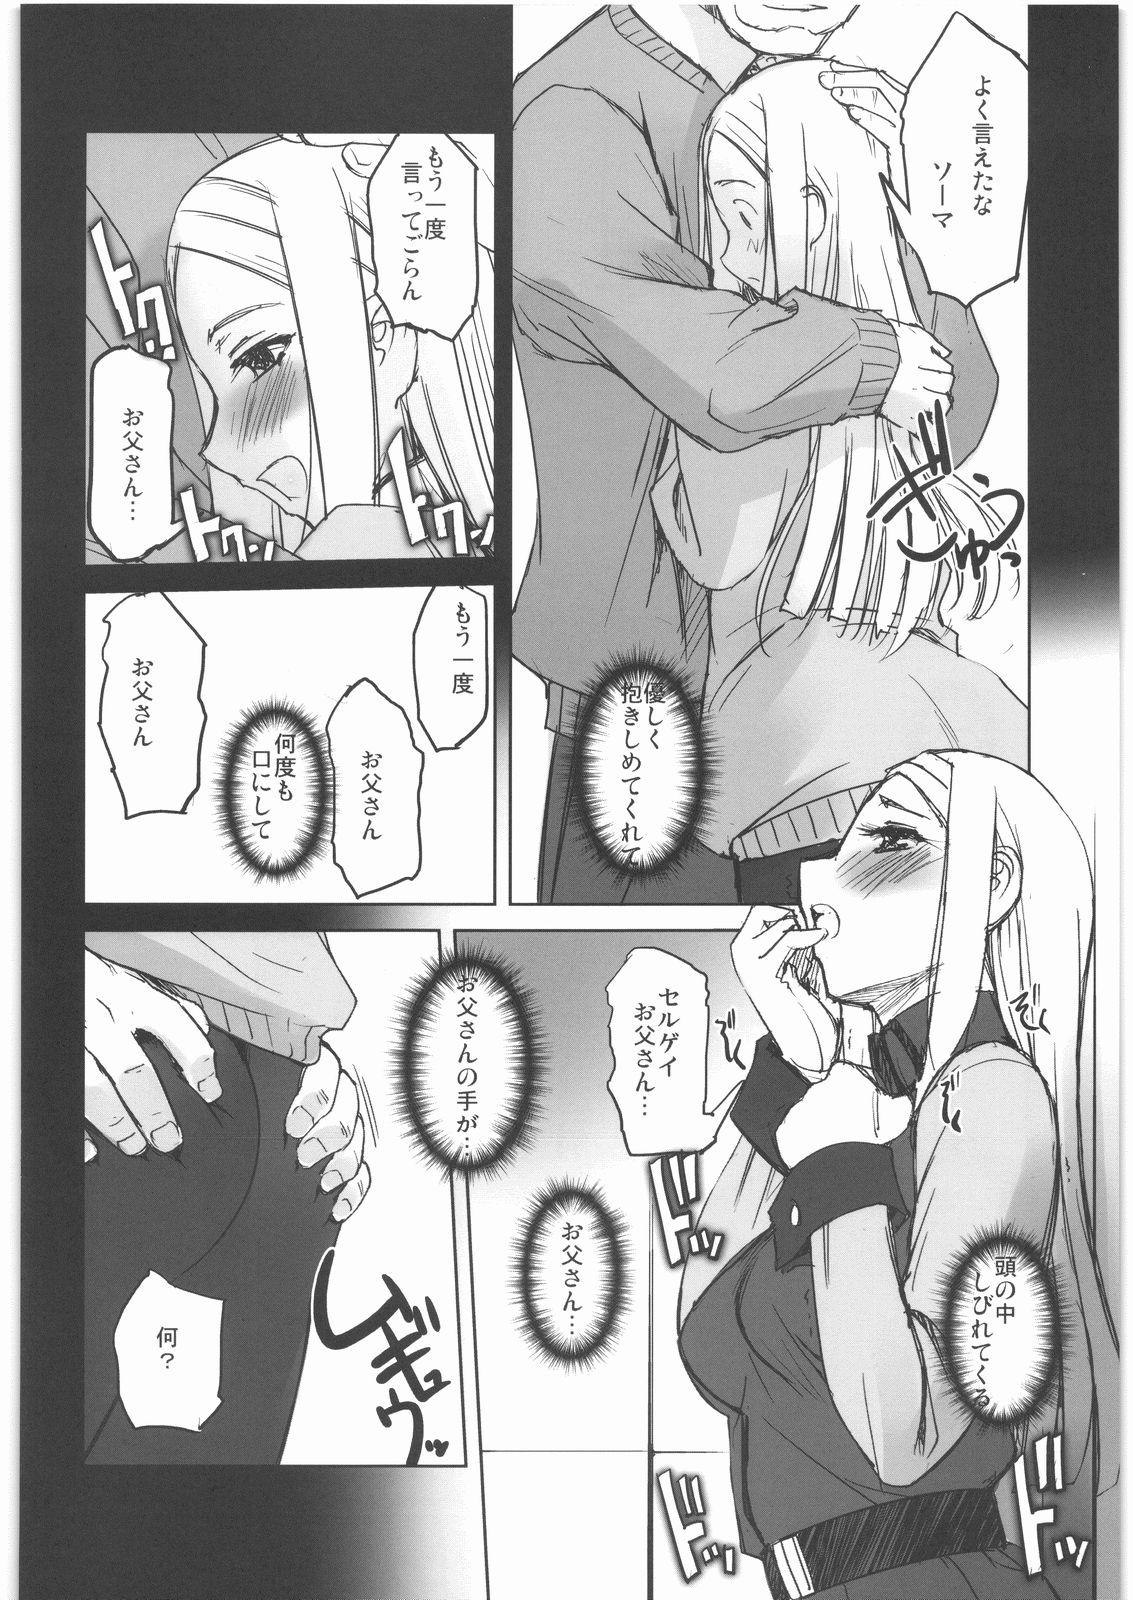 Girlfriends 00 Erotic - Gundam 00 Harcore - Page 5